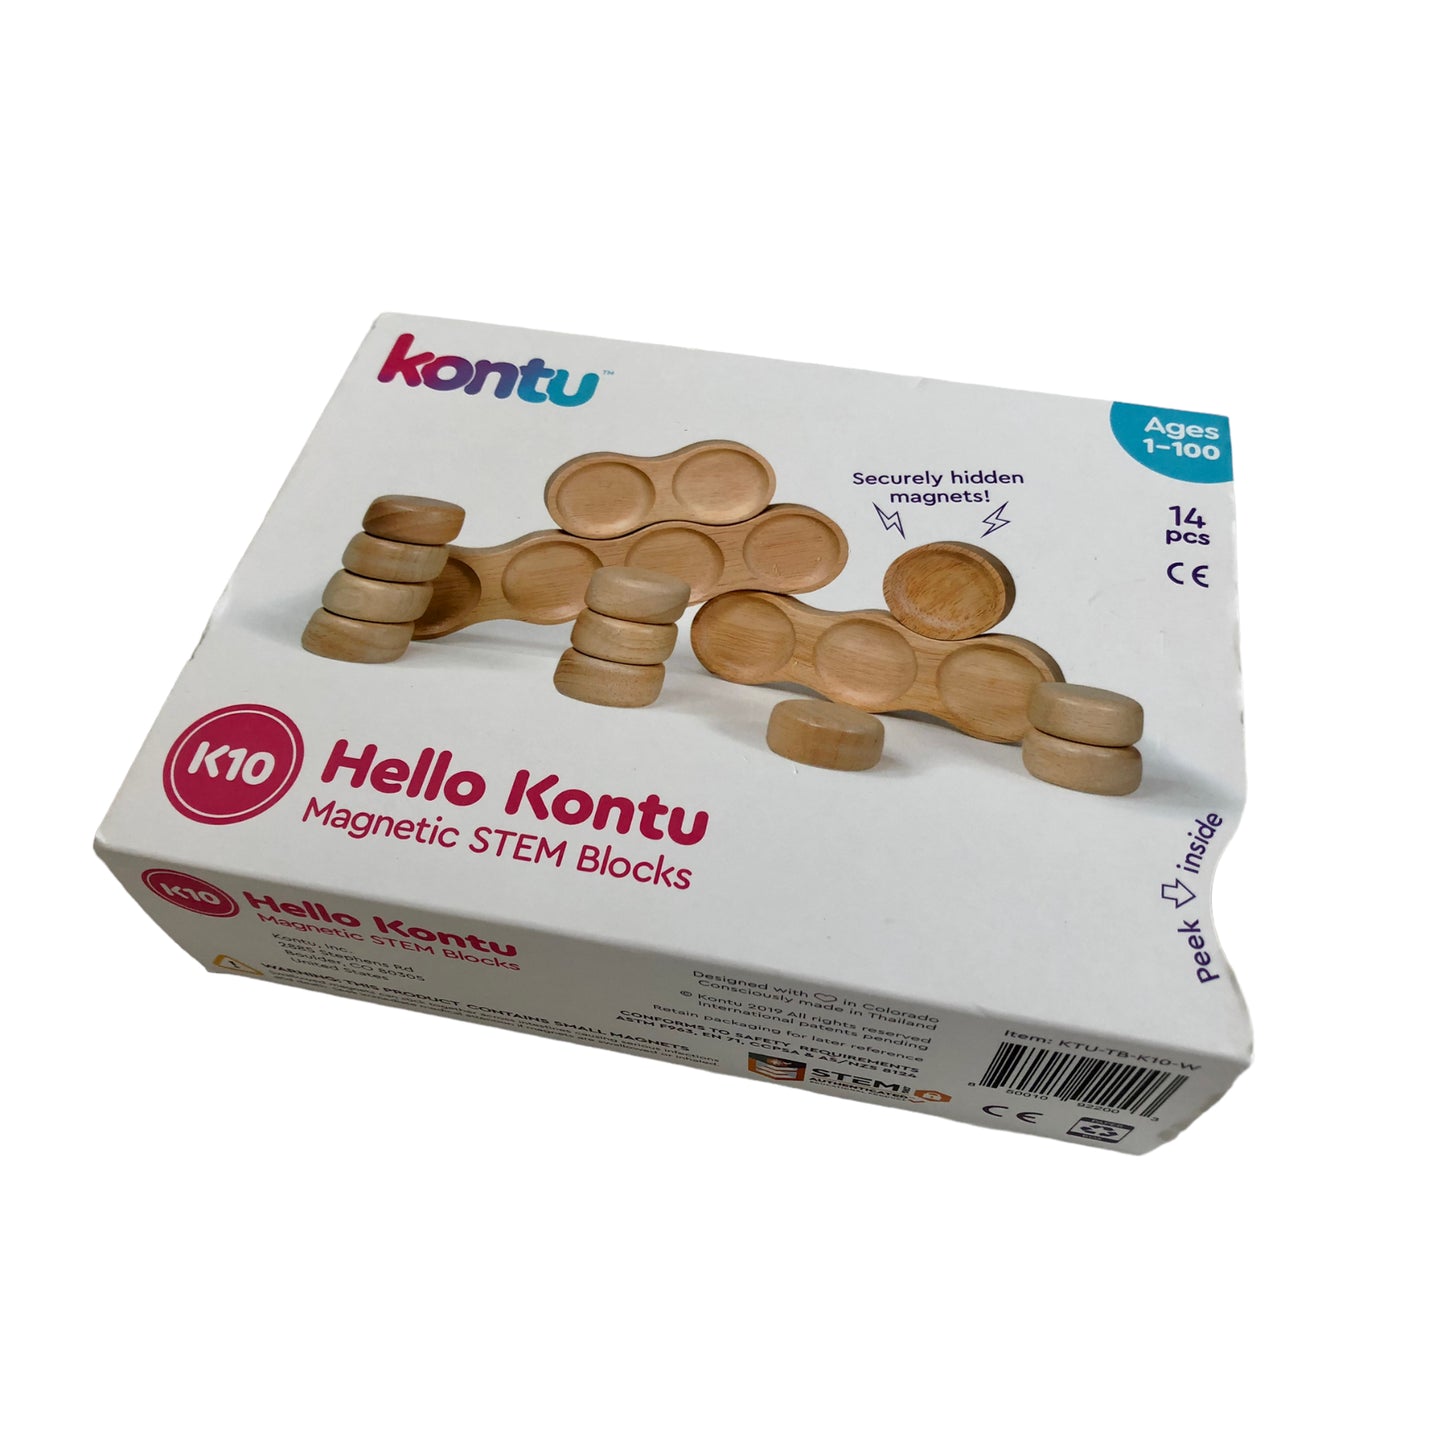 Hello Kontu K10 - Magnetic STEM Blocks - 14 Pieces